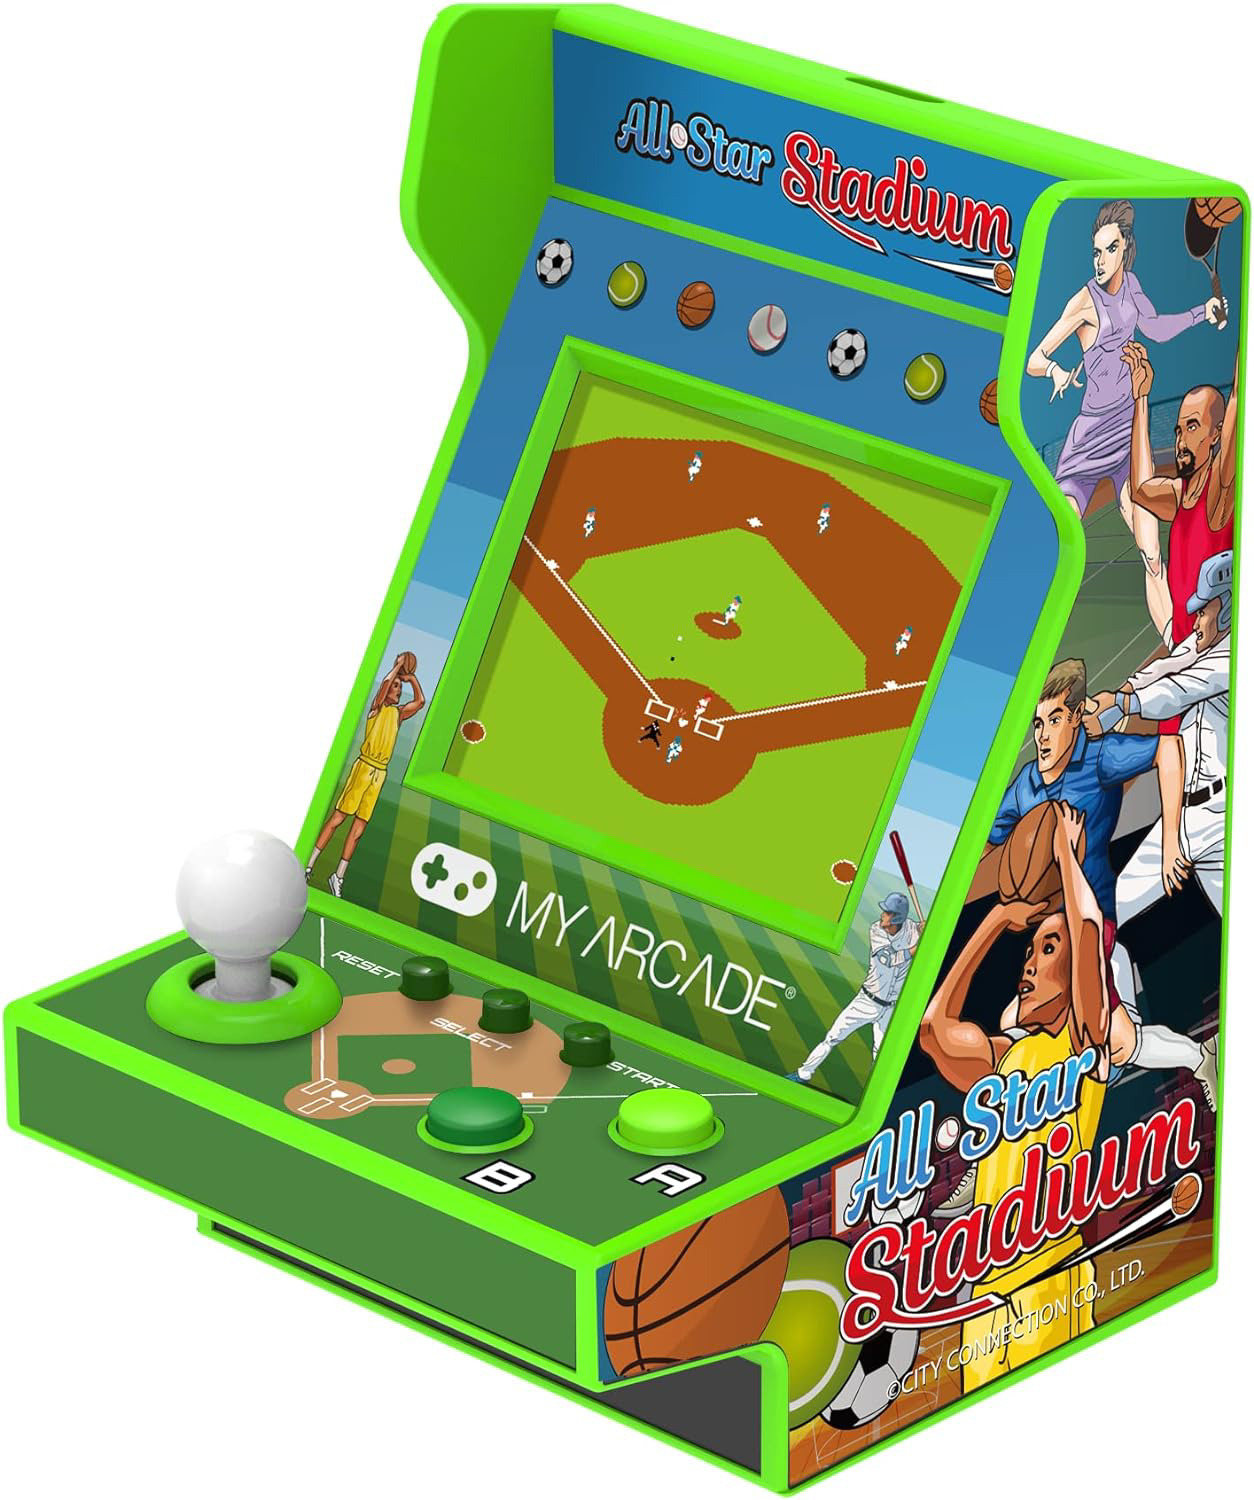 My Arcade All Star Stadium Pico Player- Fully Playable Portable Tiny Arcade with